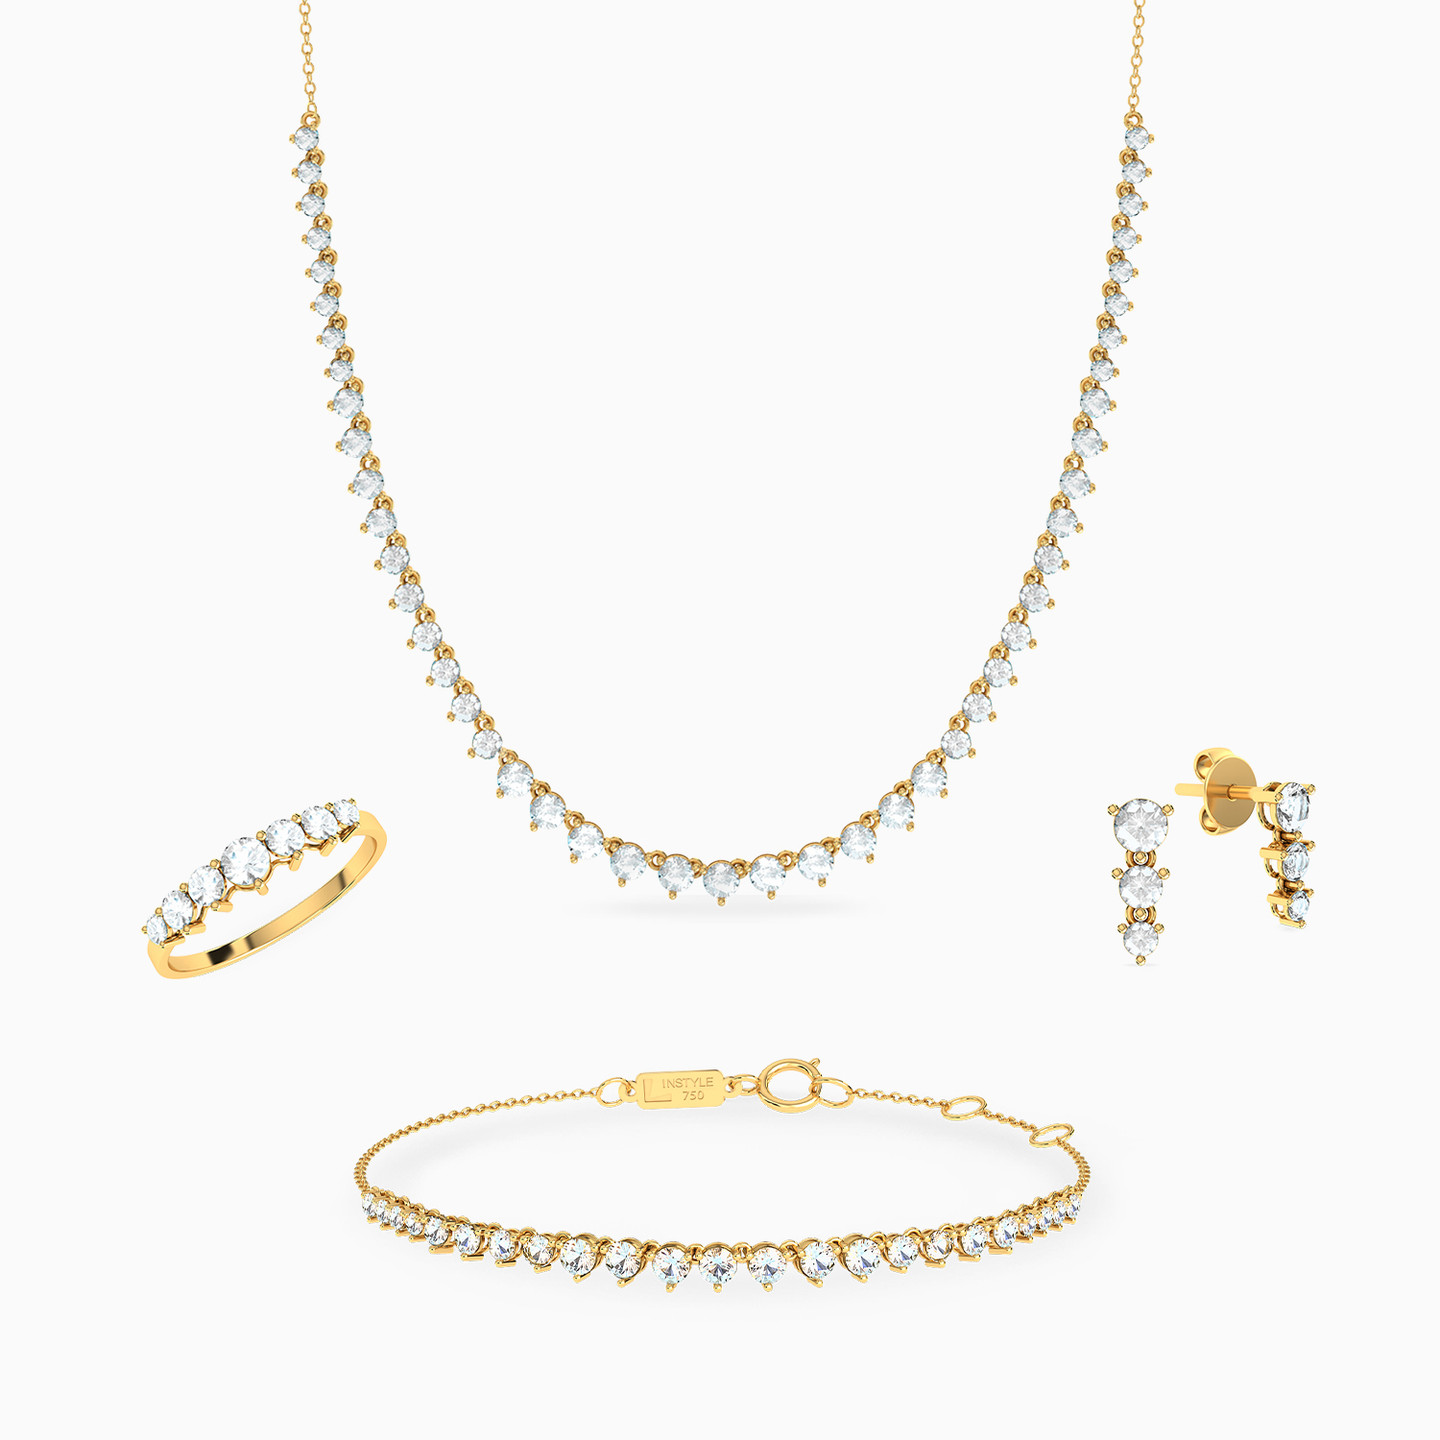 18K Gold Cubic Zirconia Jewelry Set - 3 Pieces